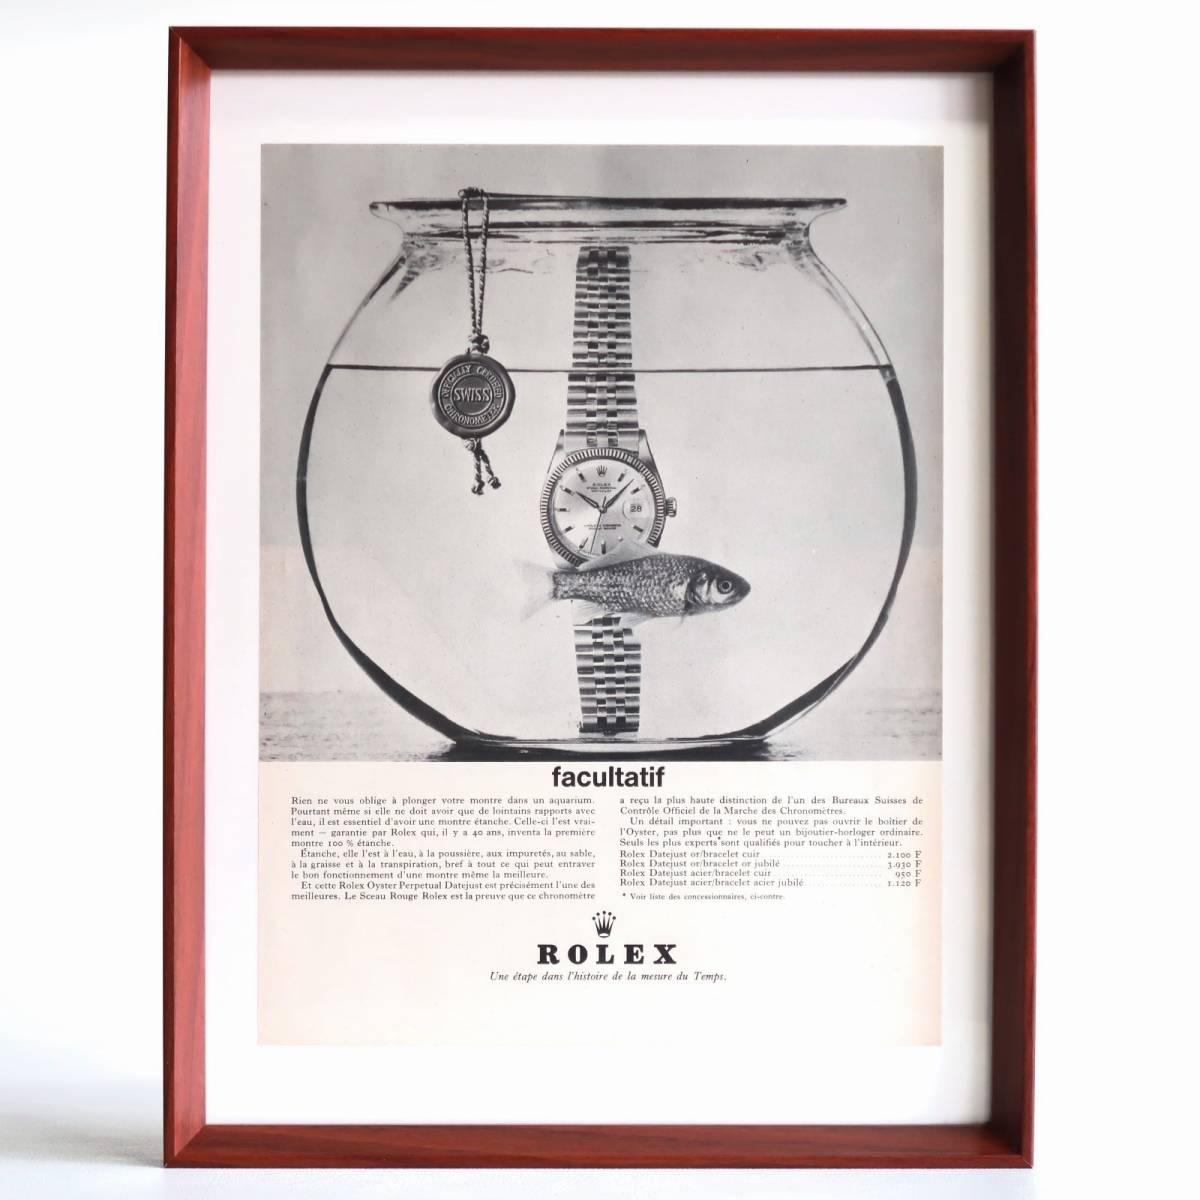 ROLEX ロレックス 1962年 デイトジャスト 腕時計 OYSTER PERPETUAL DATEJUST フランス ヴィンテージ 広告 額装品 フレンチ ポスター 稀少の画像1